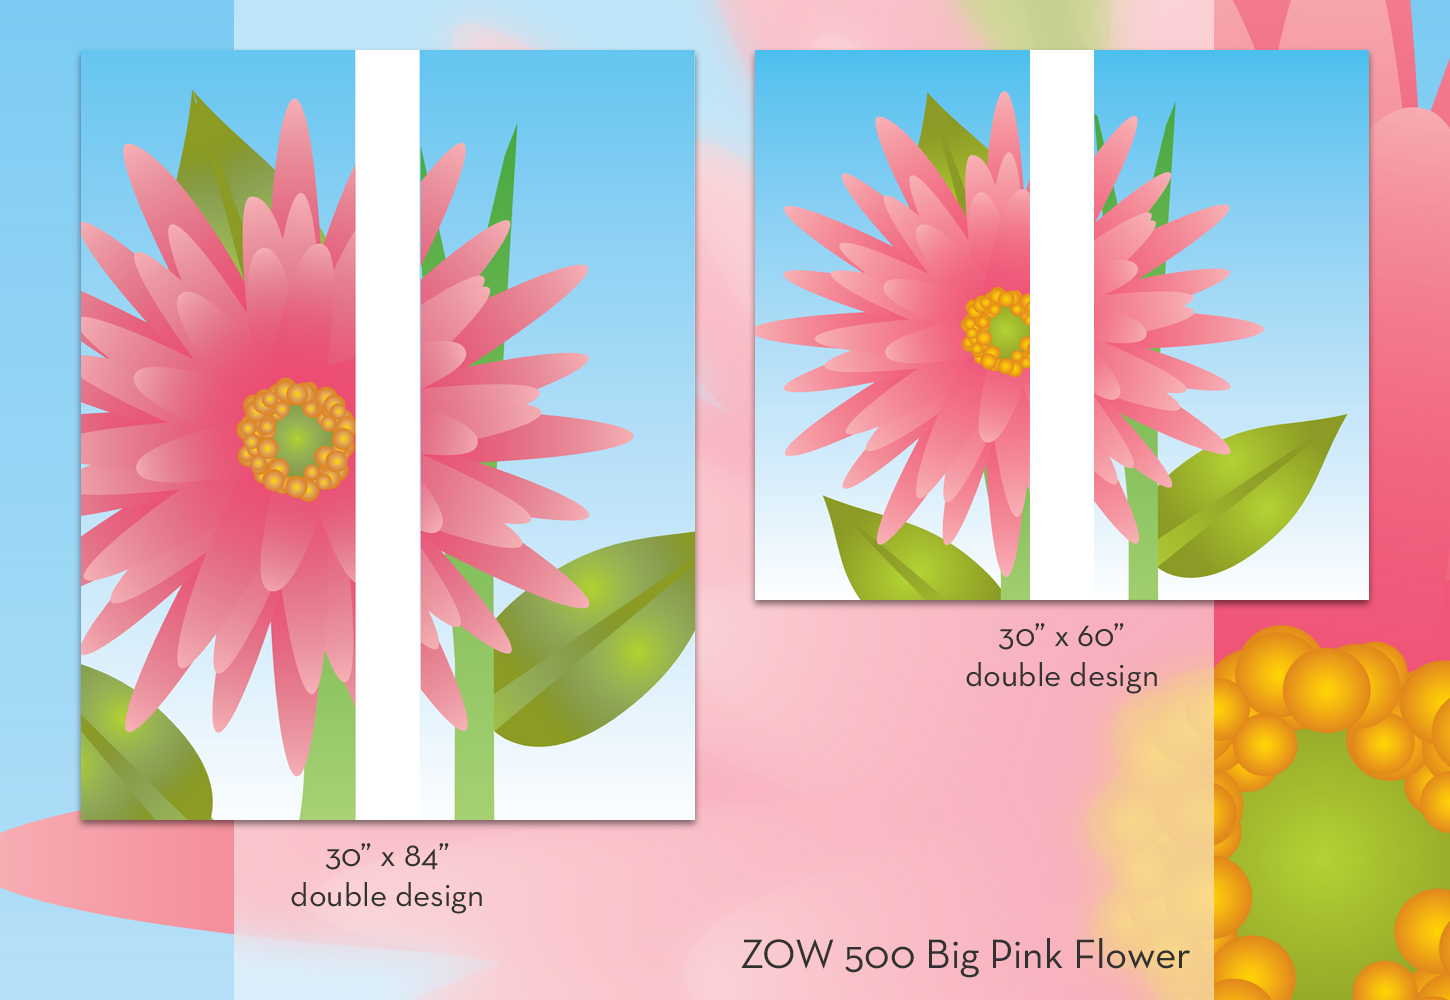 ZOW 500 Big Pink Flower